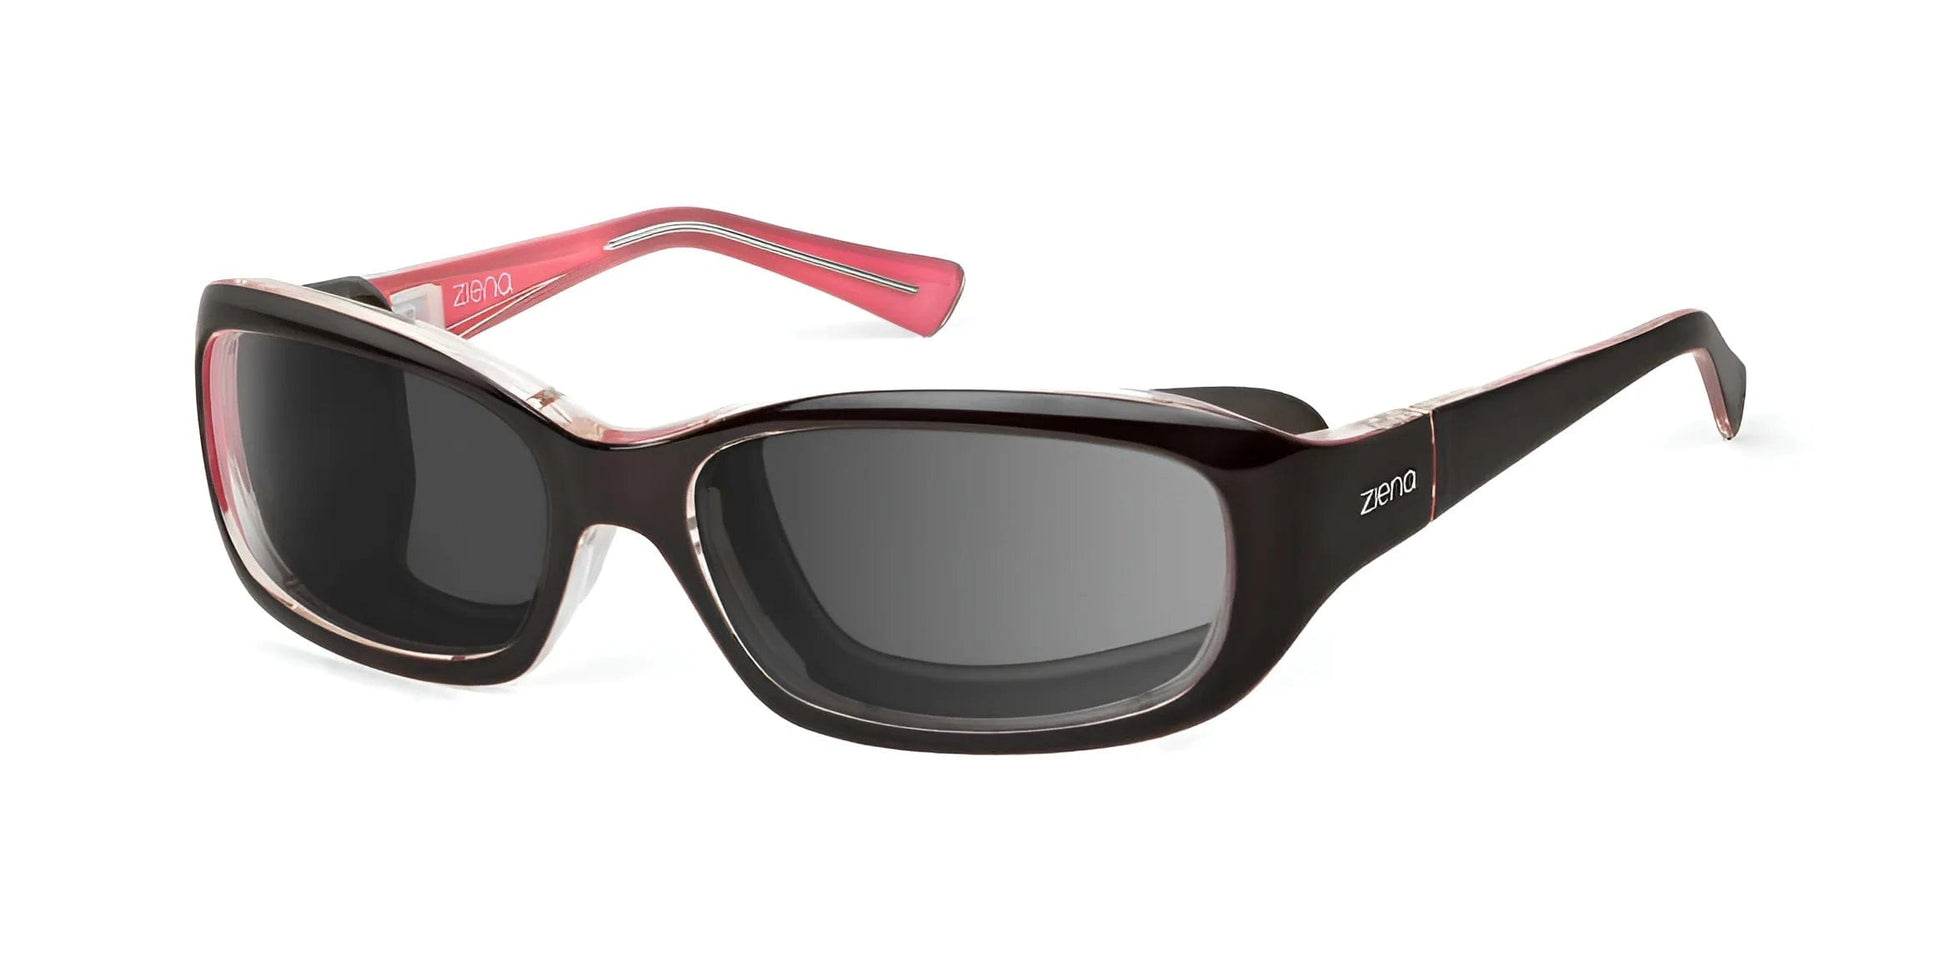 Ziena Verona Sunglasses Rose / Gray +2.50 / Black